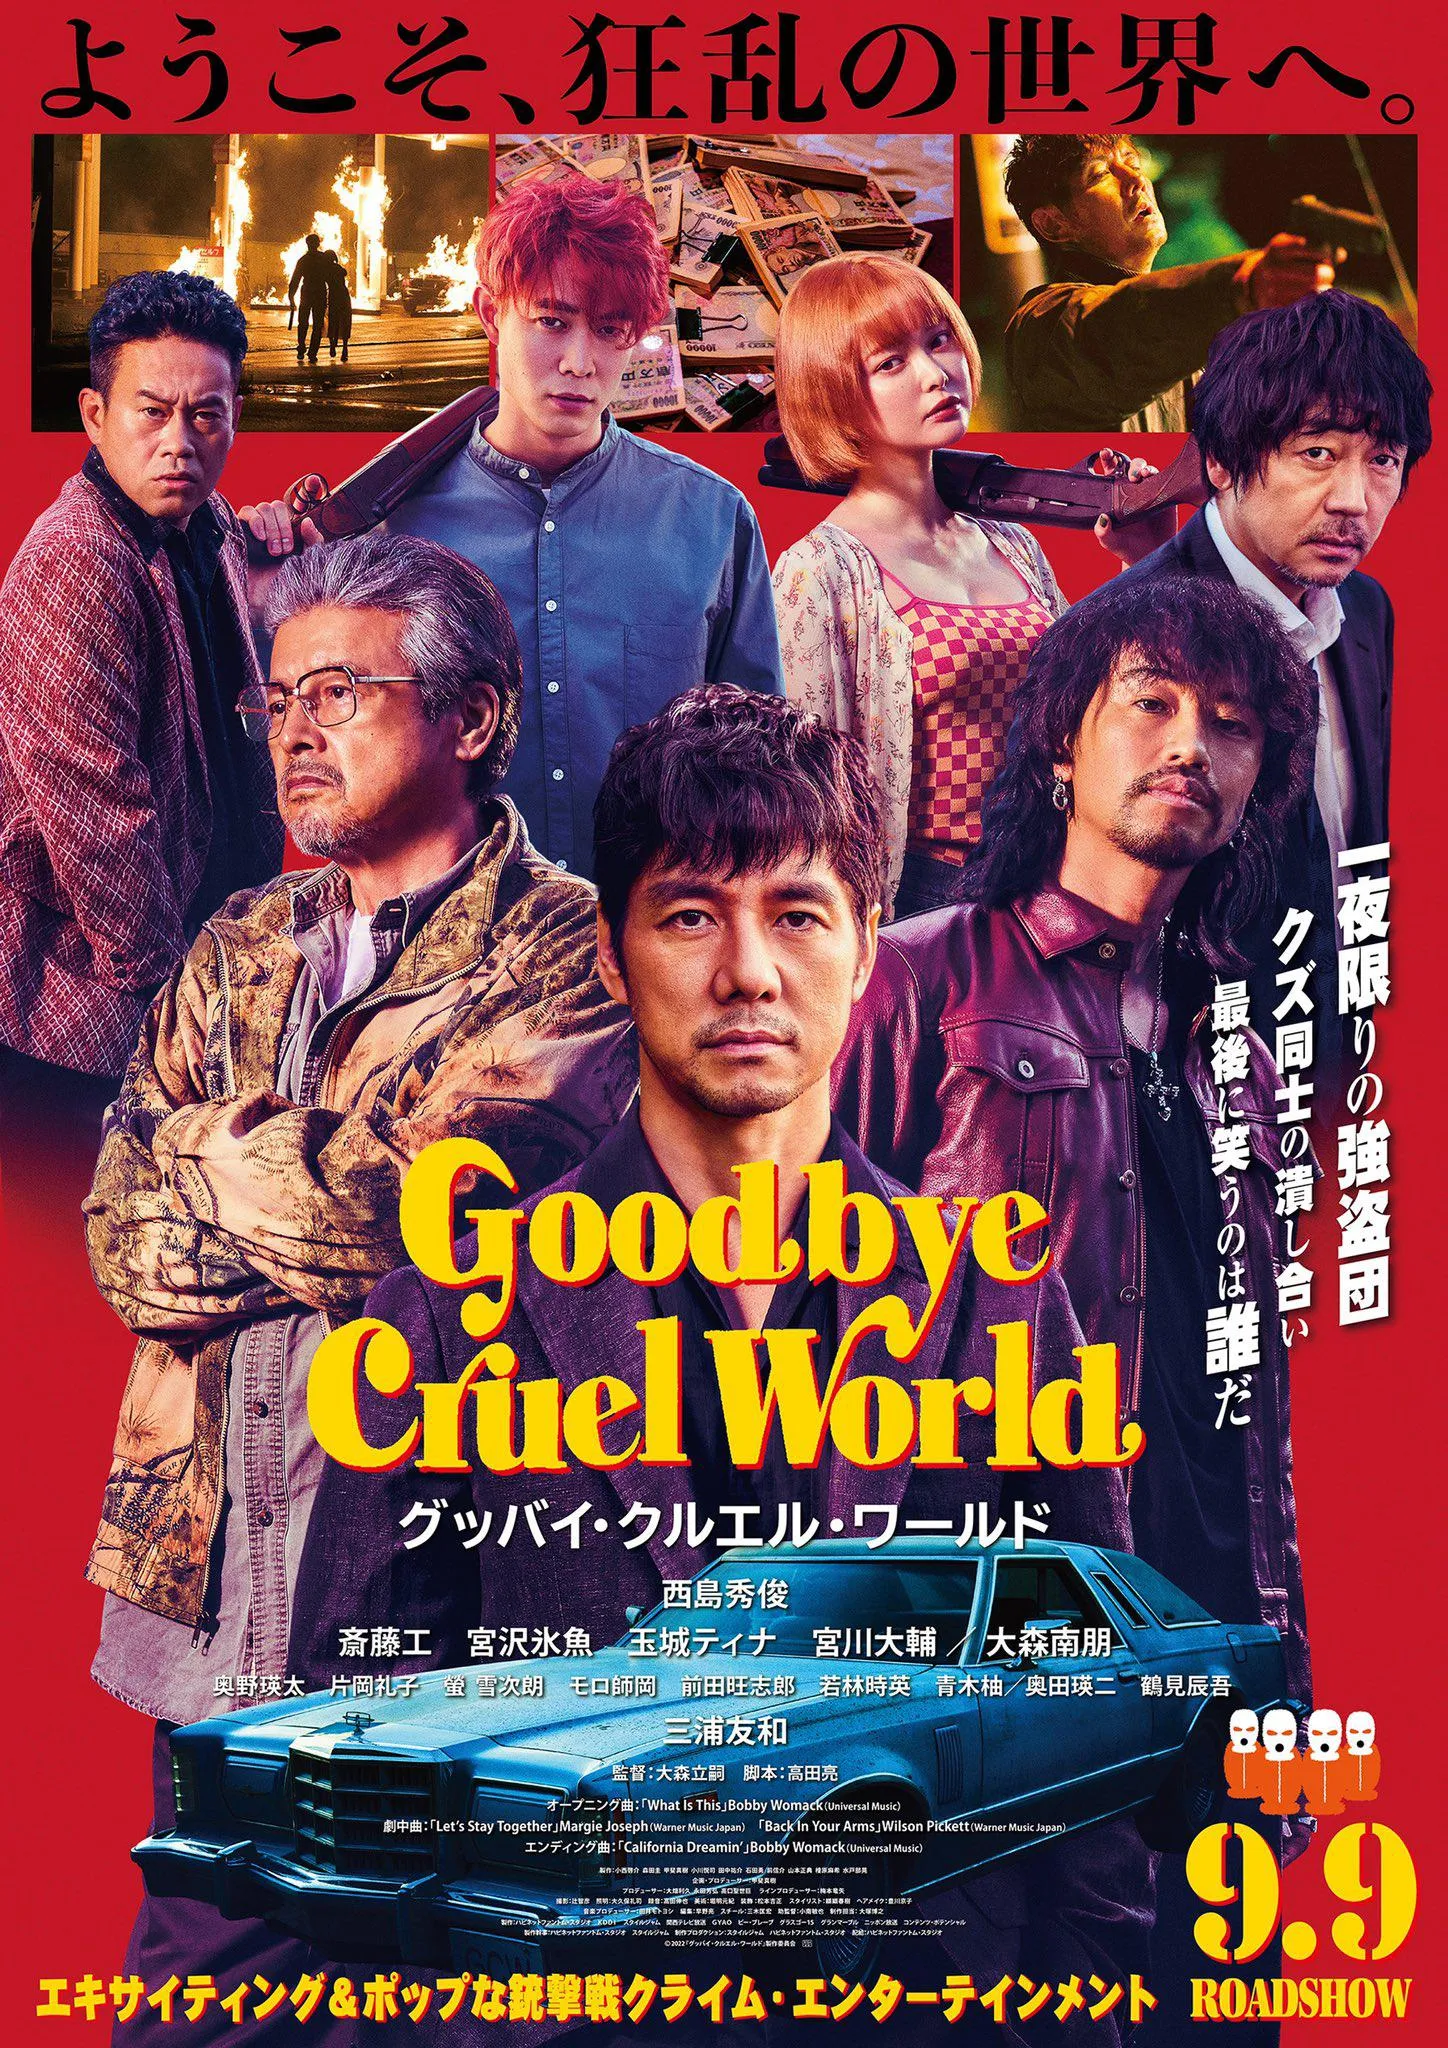 Hidetoshi Nishijima's new film "Goodbye Cruel World" released official trailer, it will be released in Japan on 9.9 | FMV6